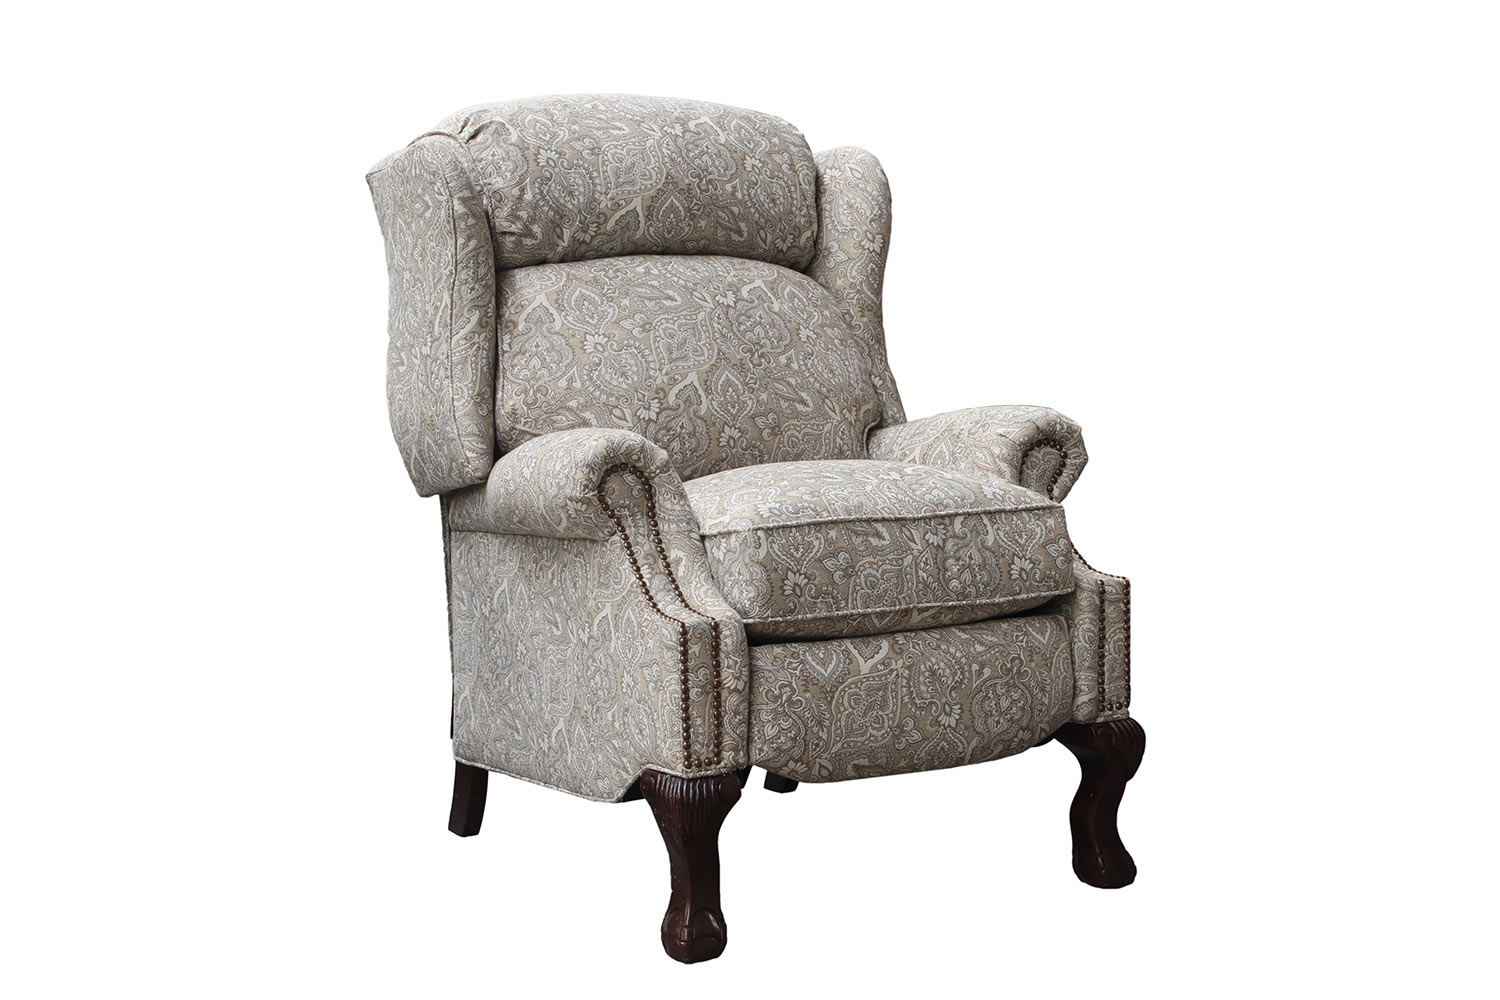 Barcalounger Danbury Recliner Chair - Rustic Doe fabric